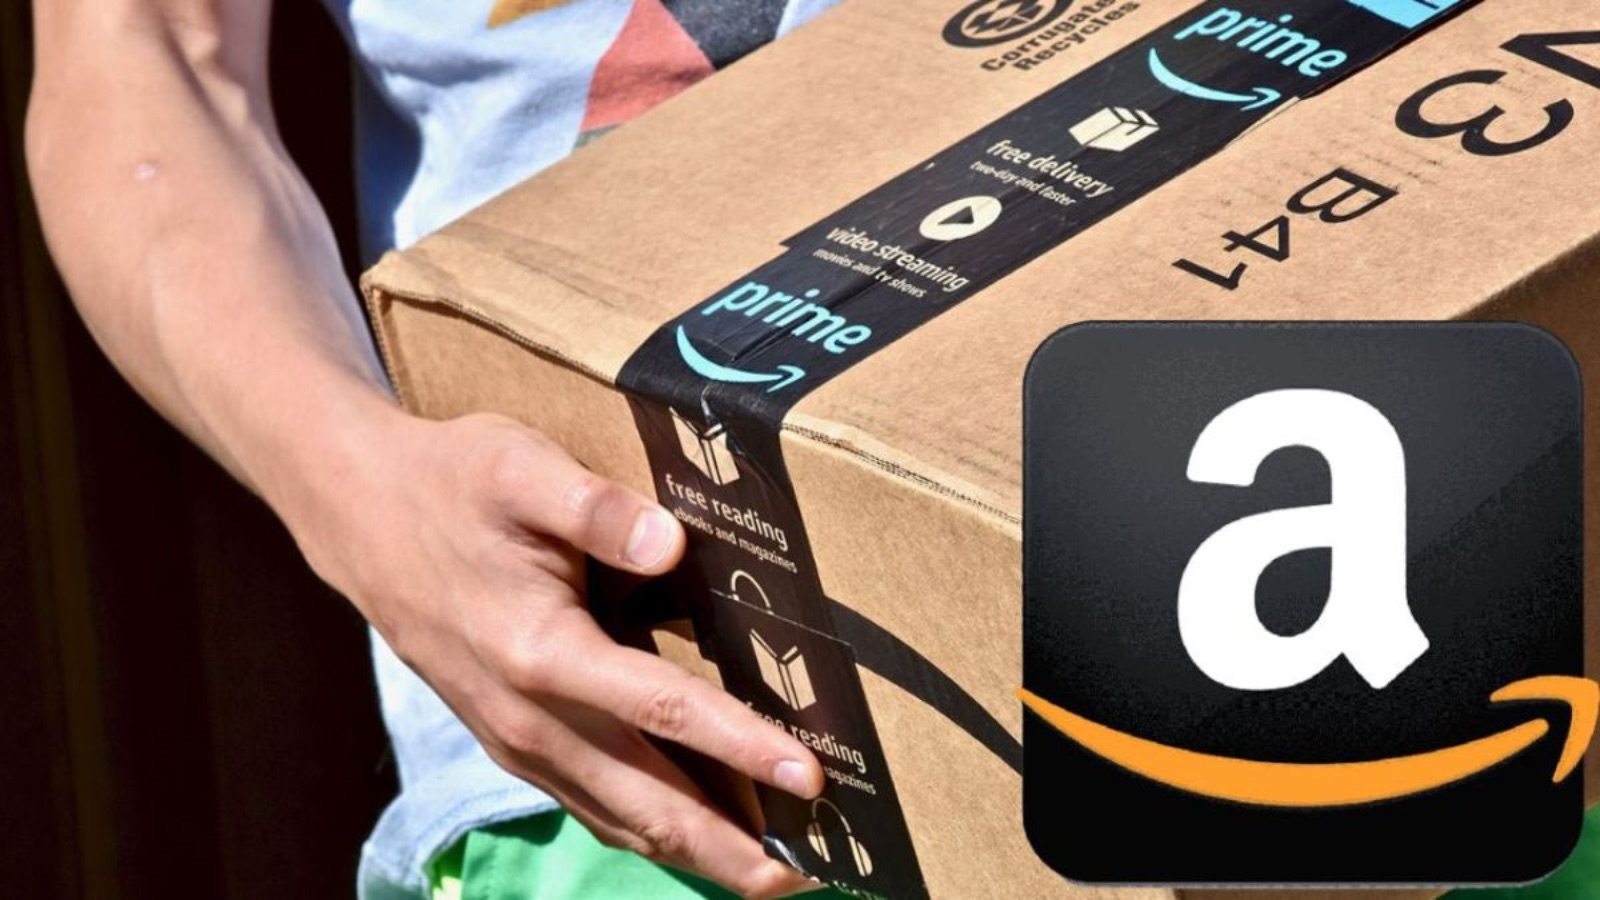 Amazon distrugge EURONICS con offerte e codici SCONTO gratis